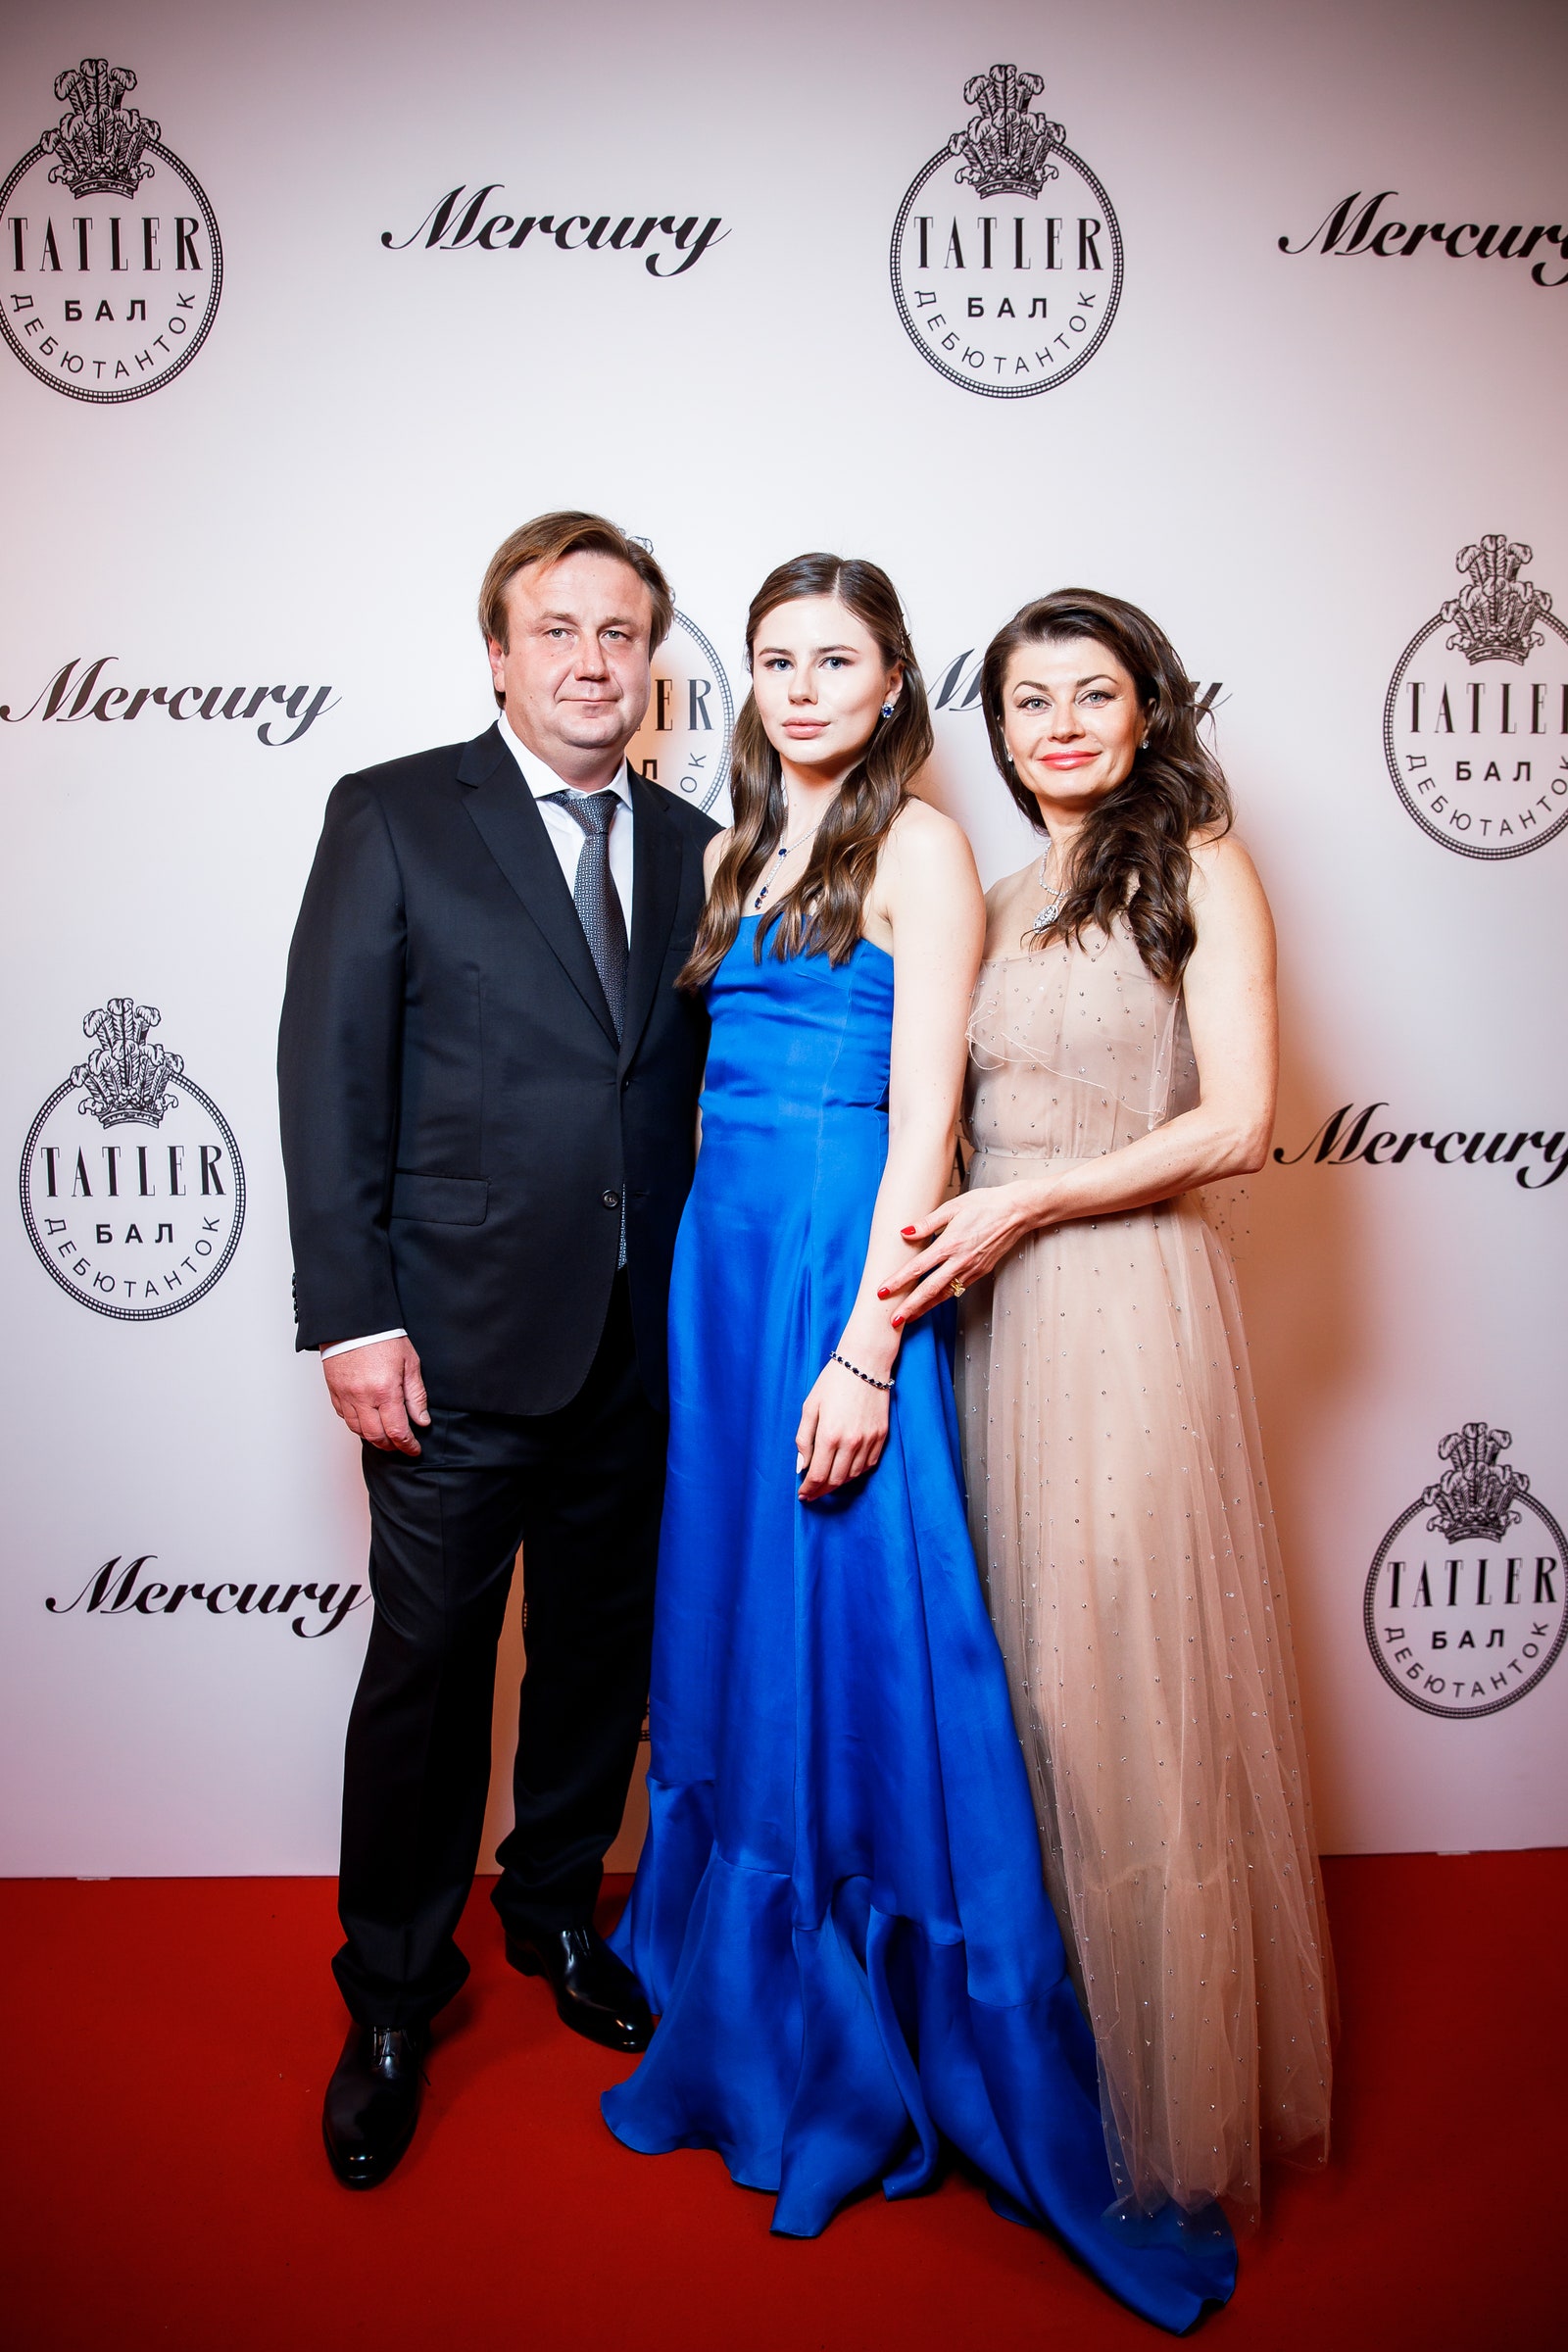 Валерия Евсеева с родителями — Дмитрием и Наталией Евсеевыми